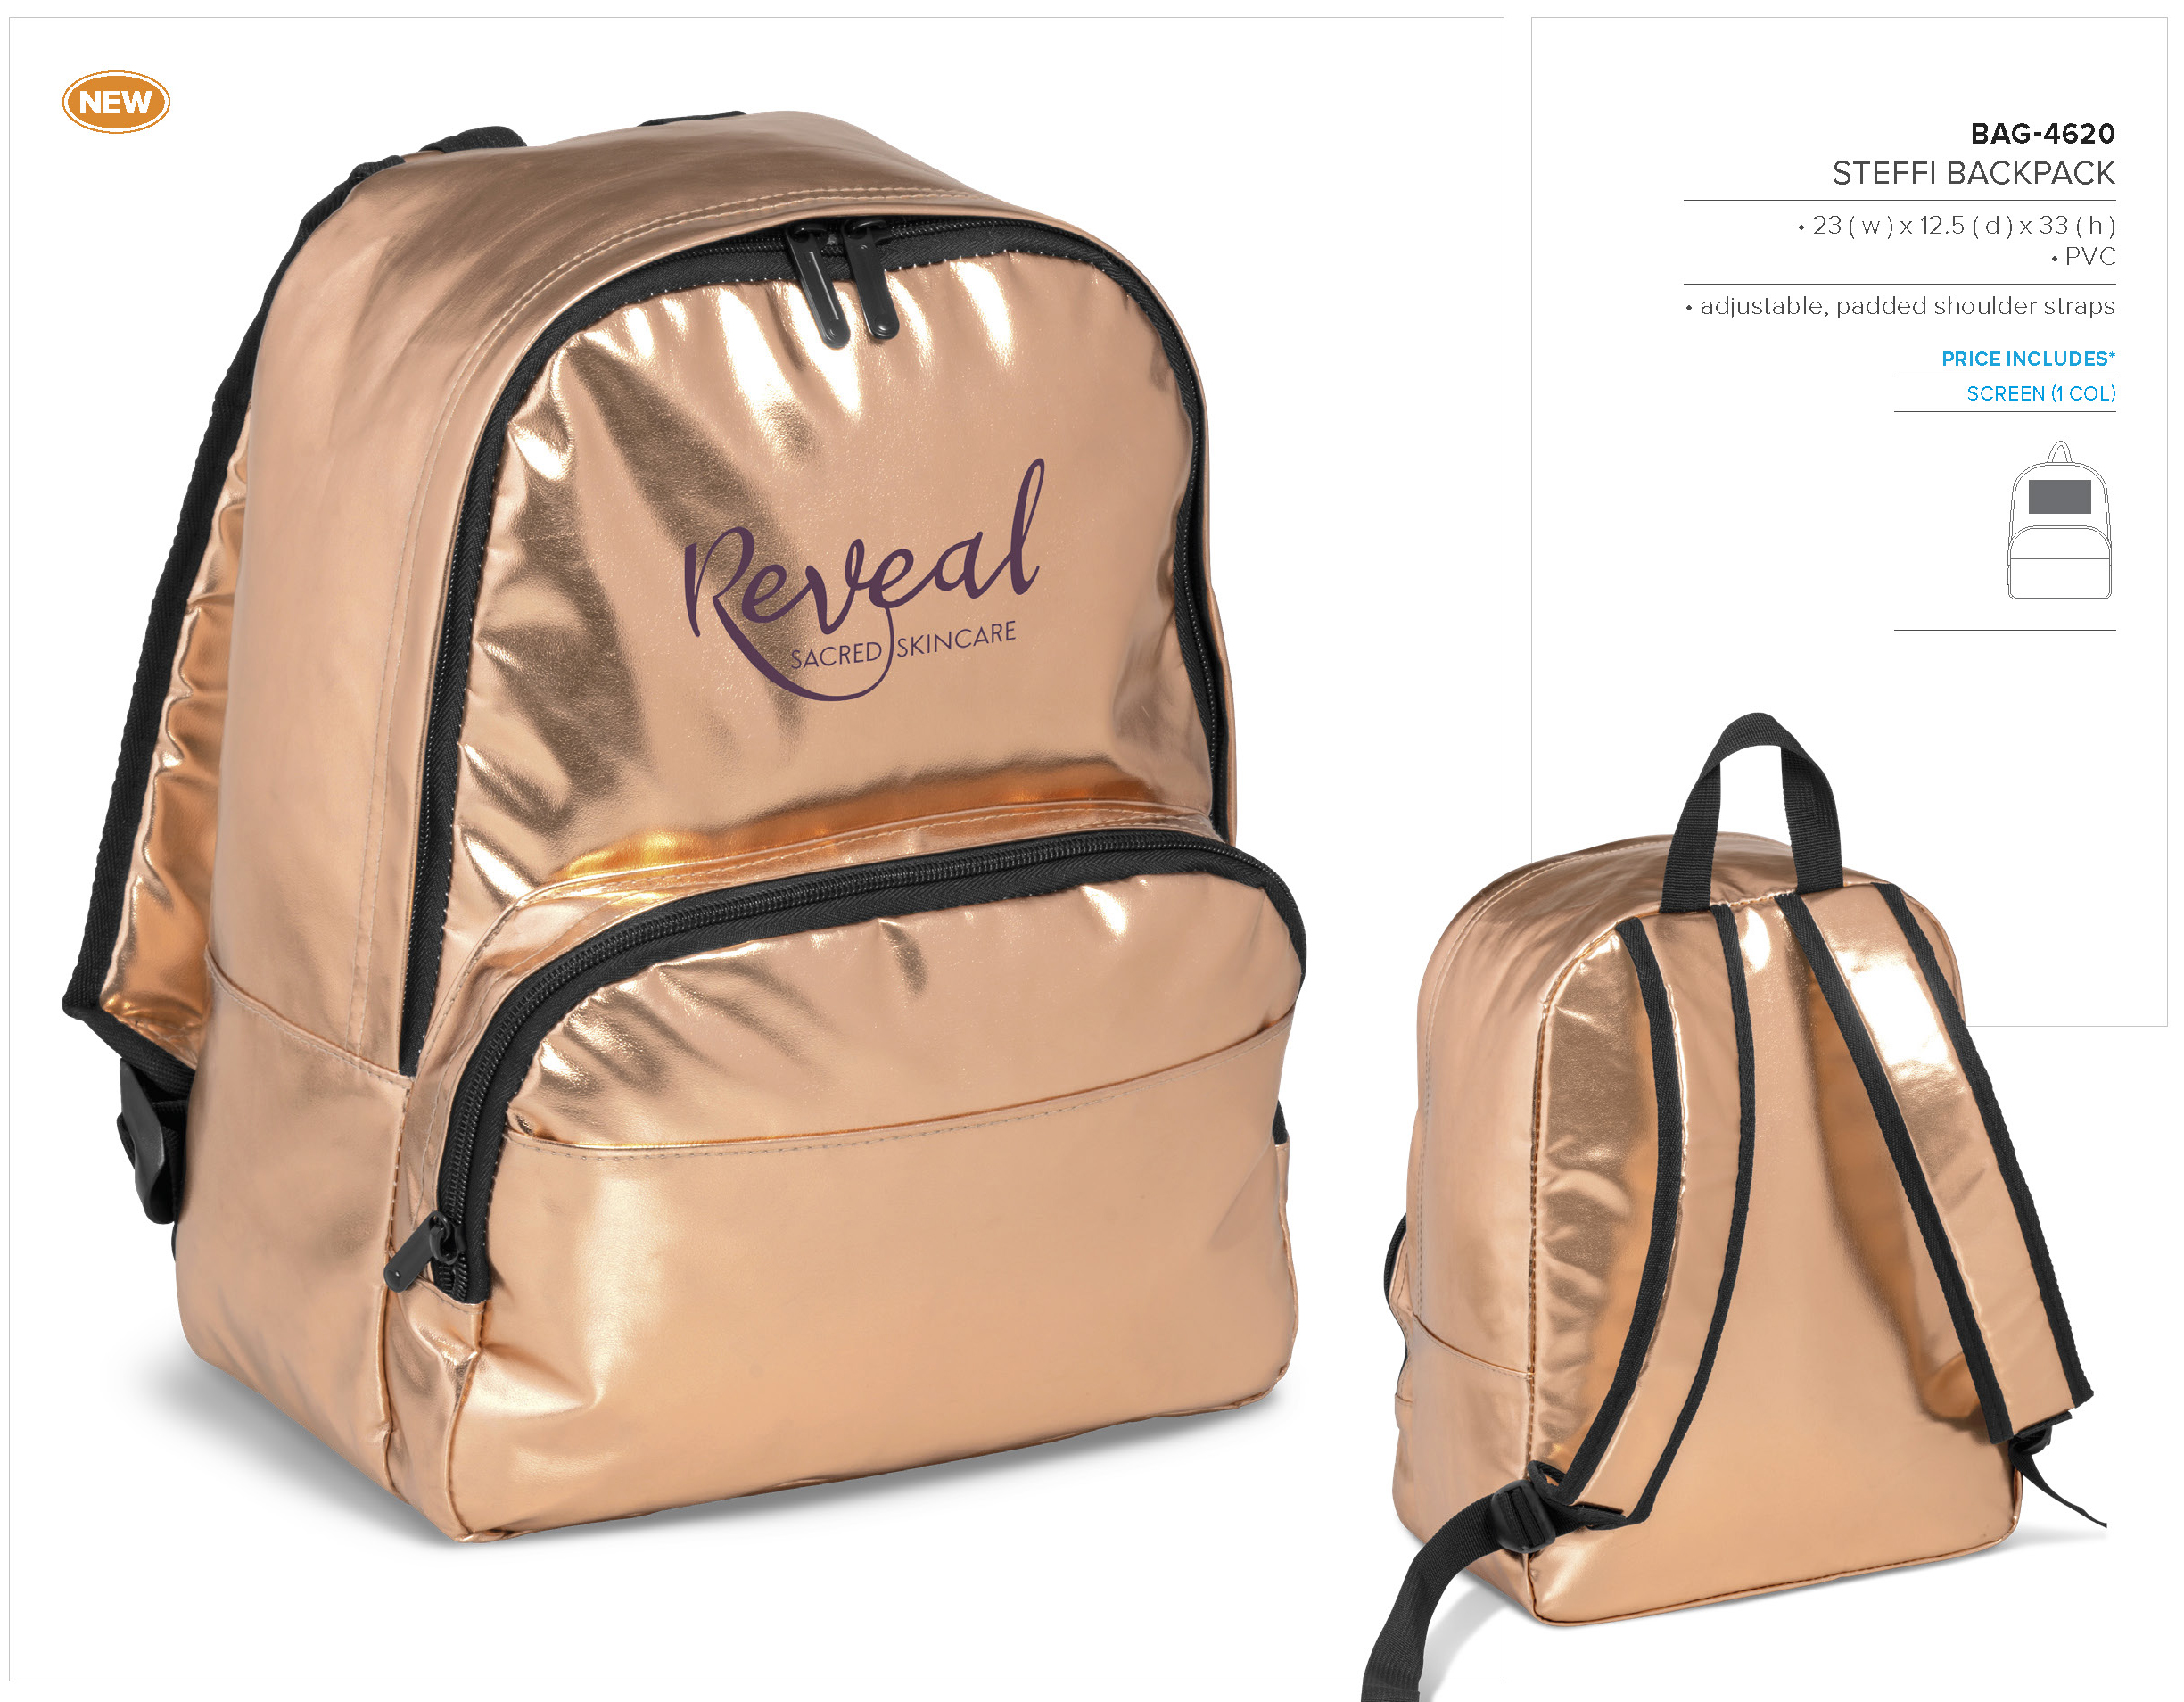 BAG-4620 - Steffi Backpack - Catalogue Image